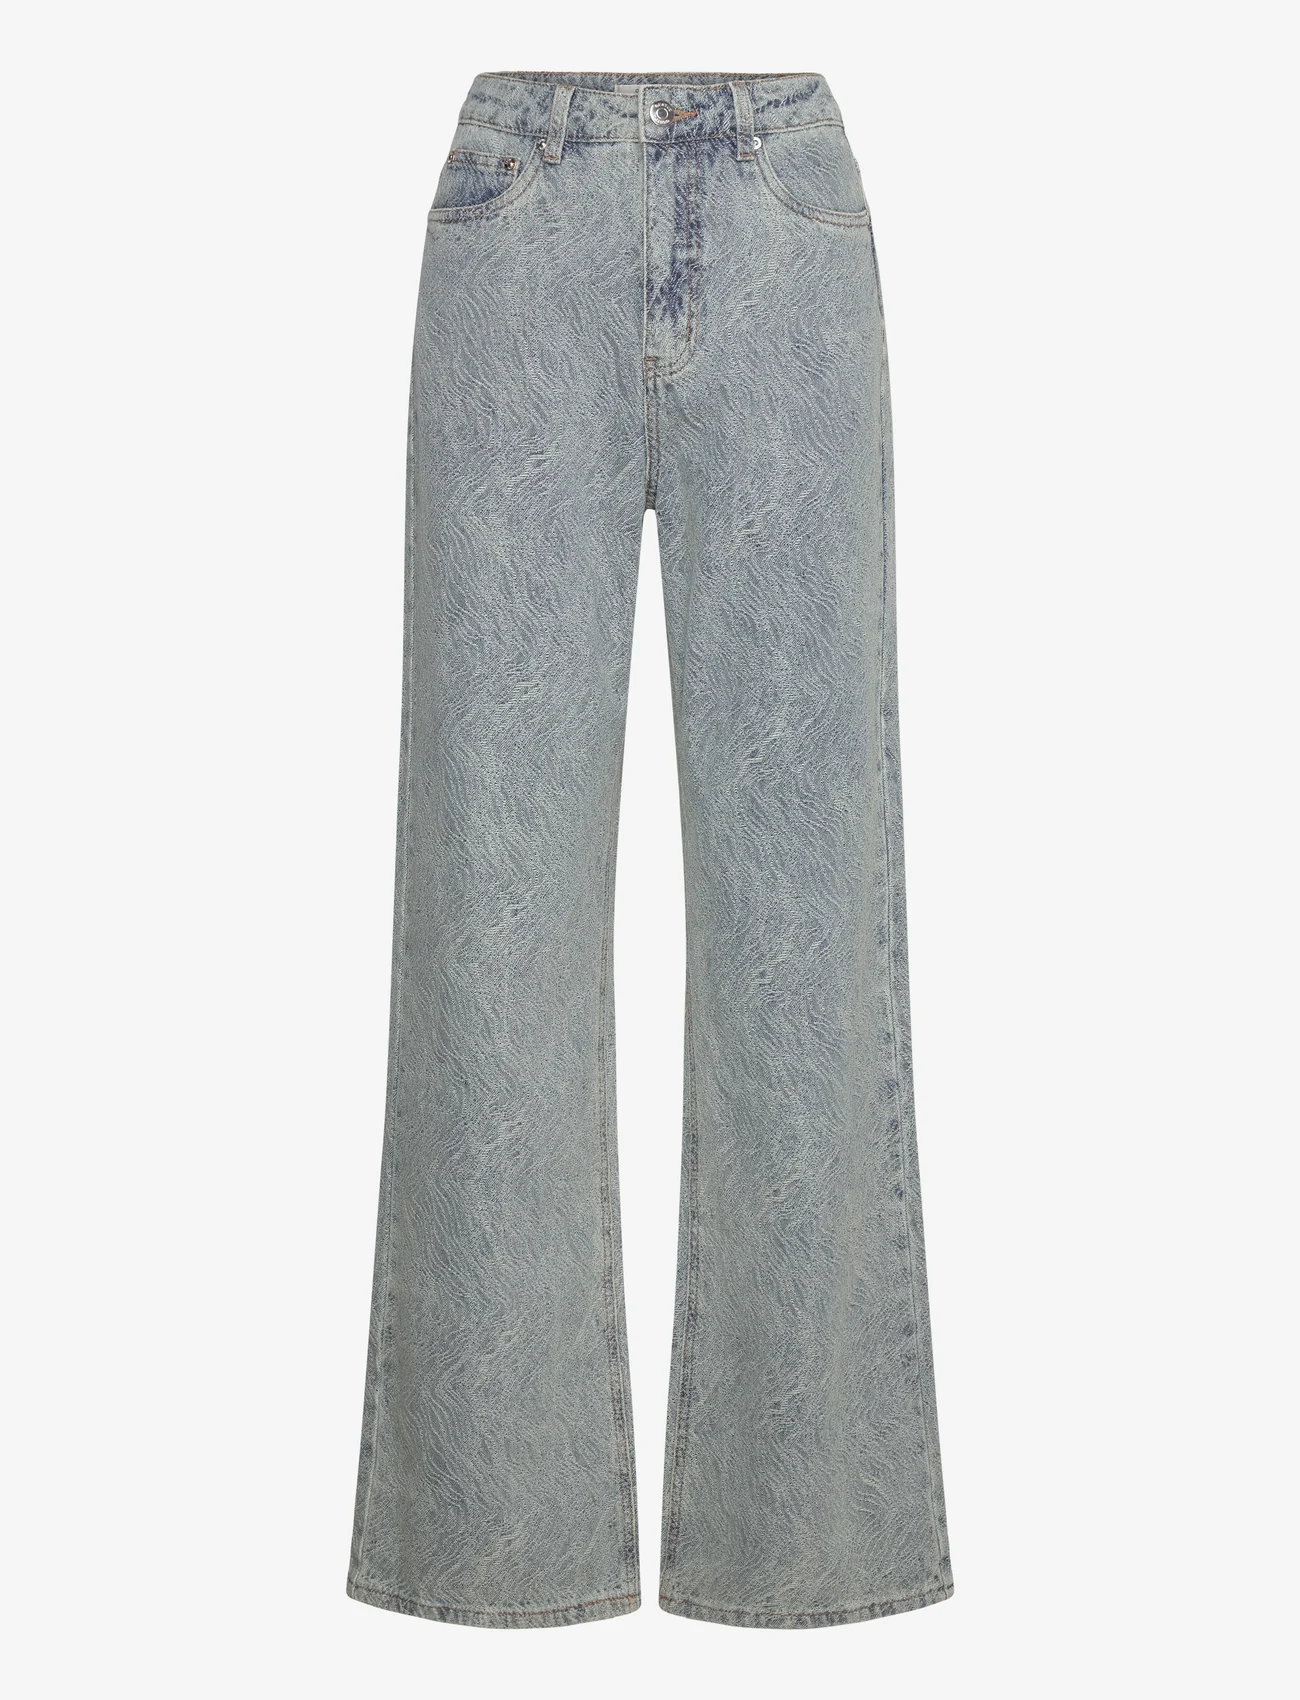 Gestuz - GiannaGZ HW wide jeans - platūs džinsai - blue/white marble - 0